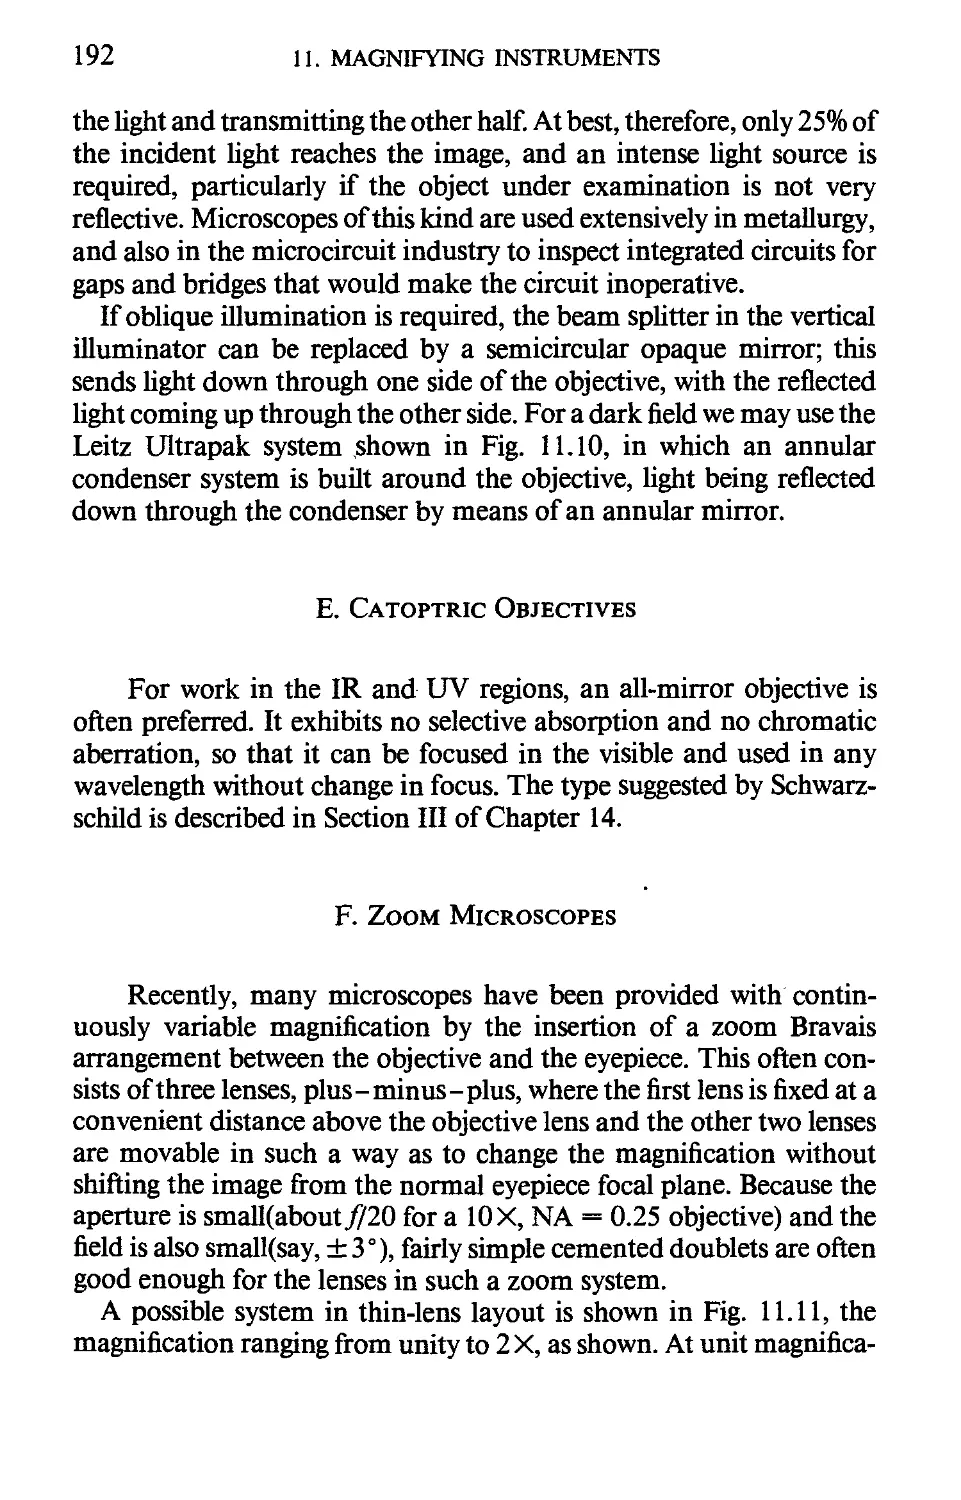 E. Catoptric Objectives
F. Zoom Microscopes